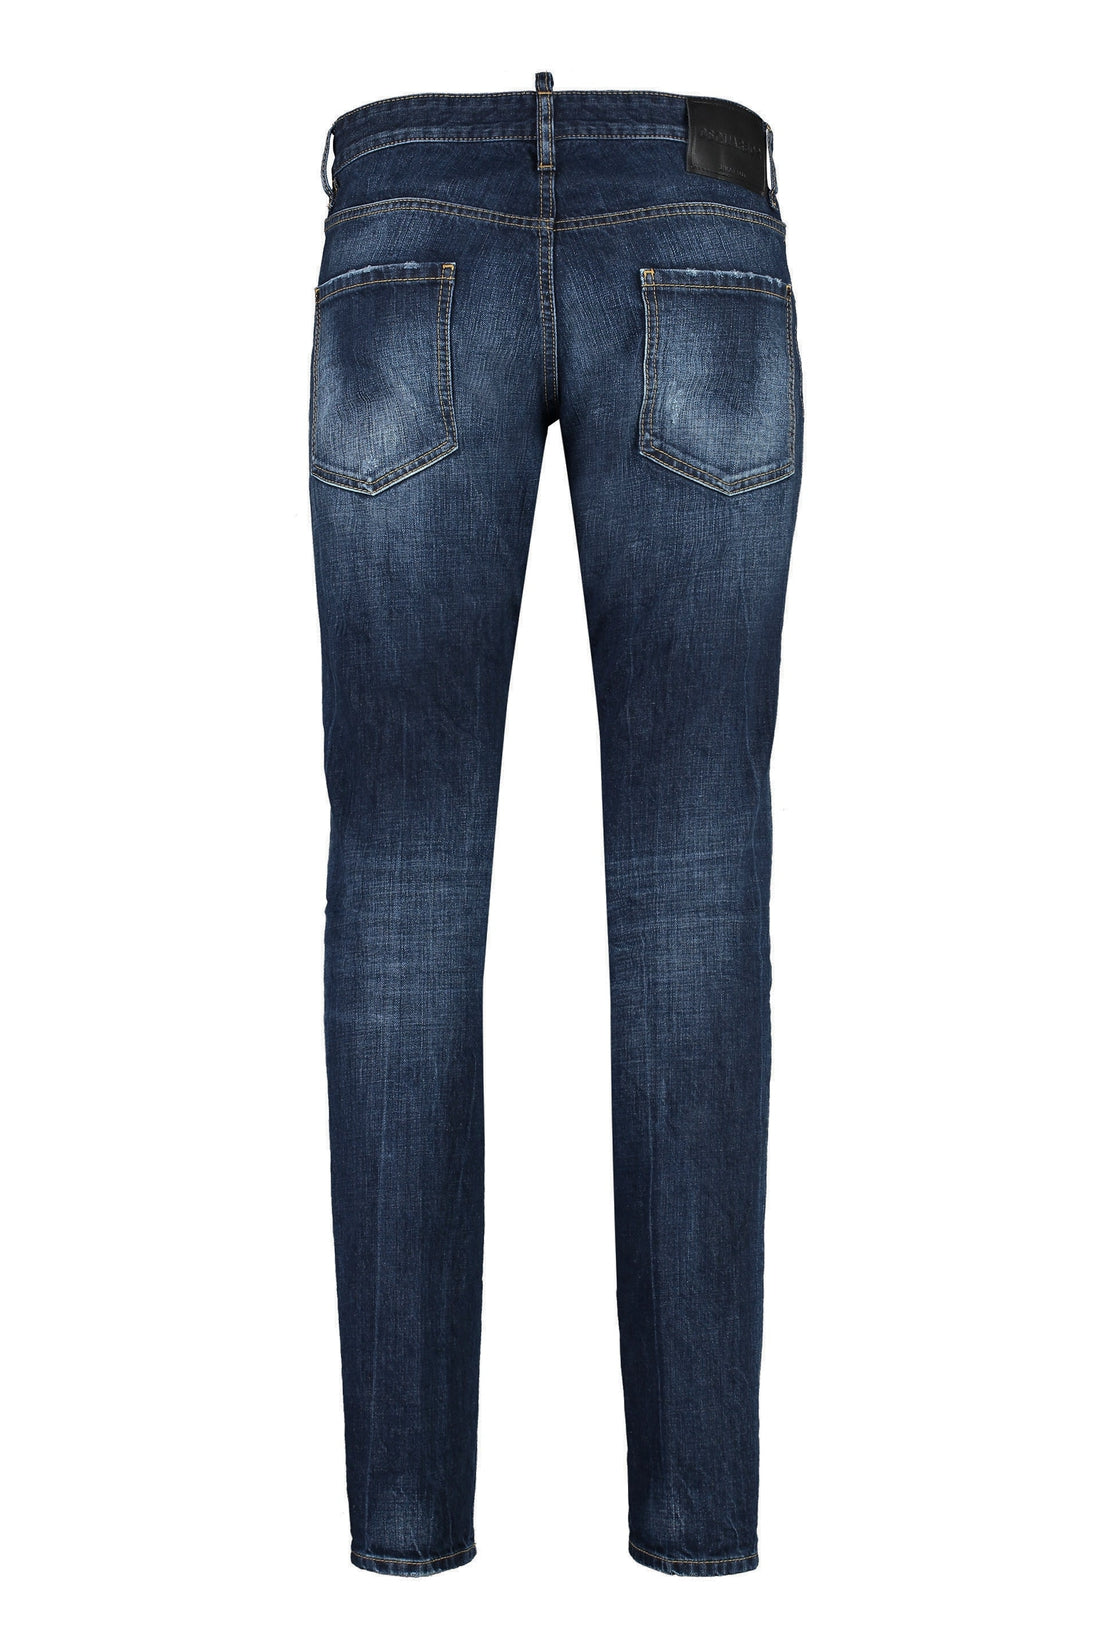 Dsquared2-OUTLET-SALE-Cool Guy jeans-ARCHIVIST